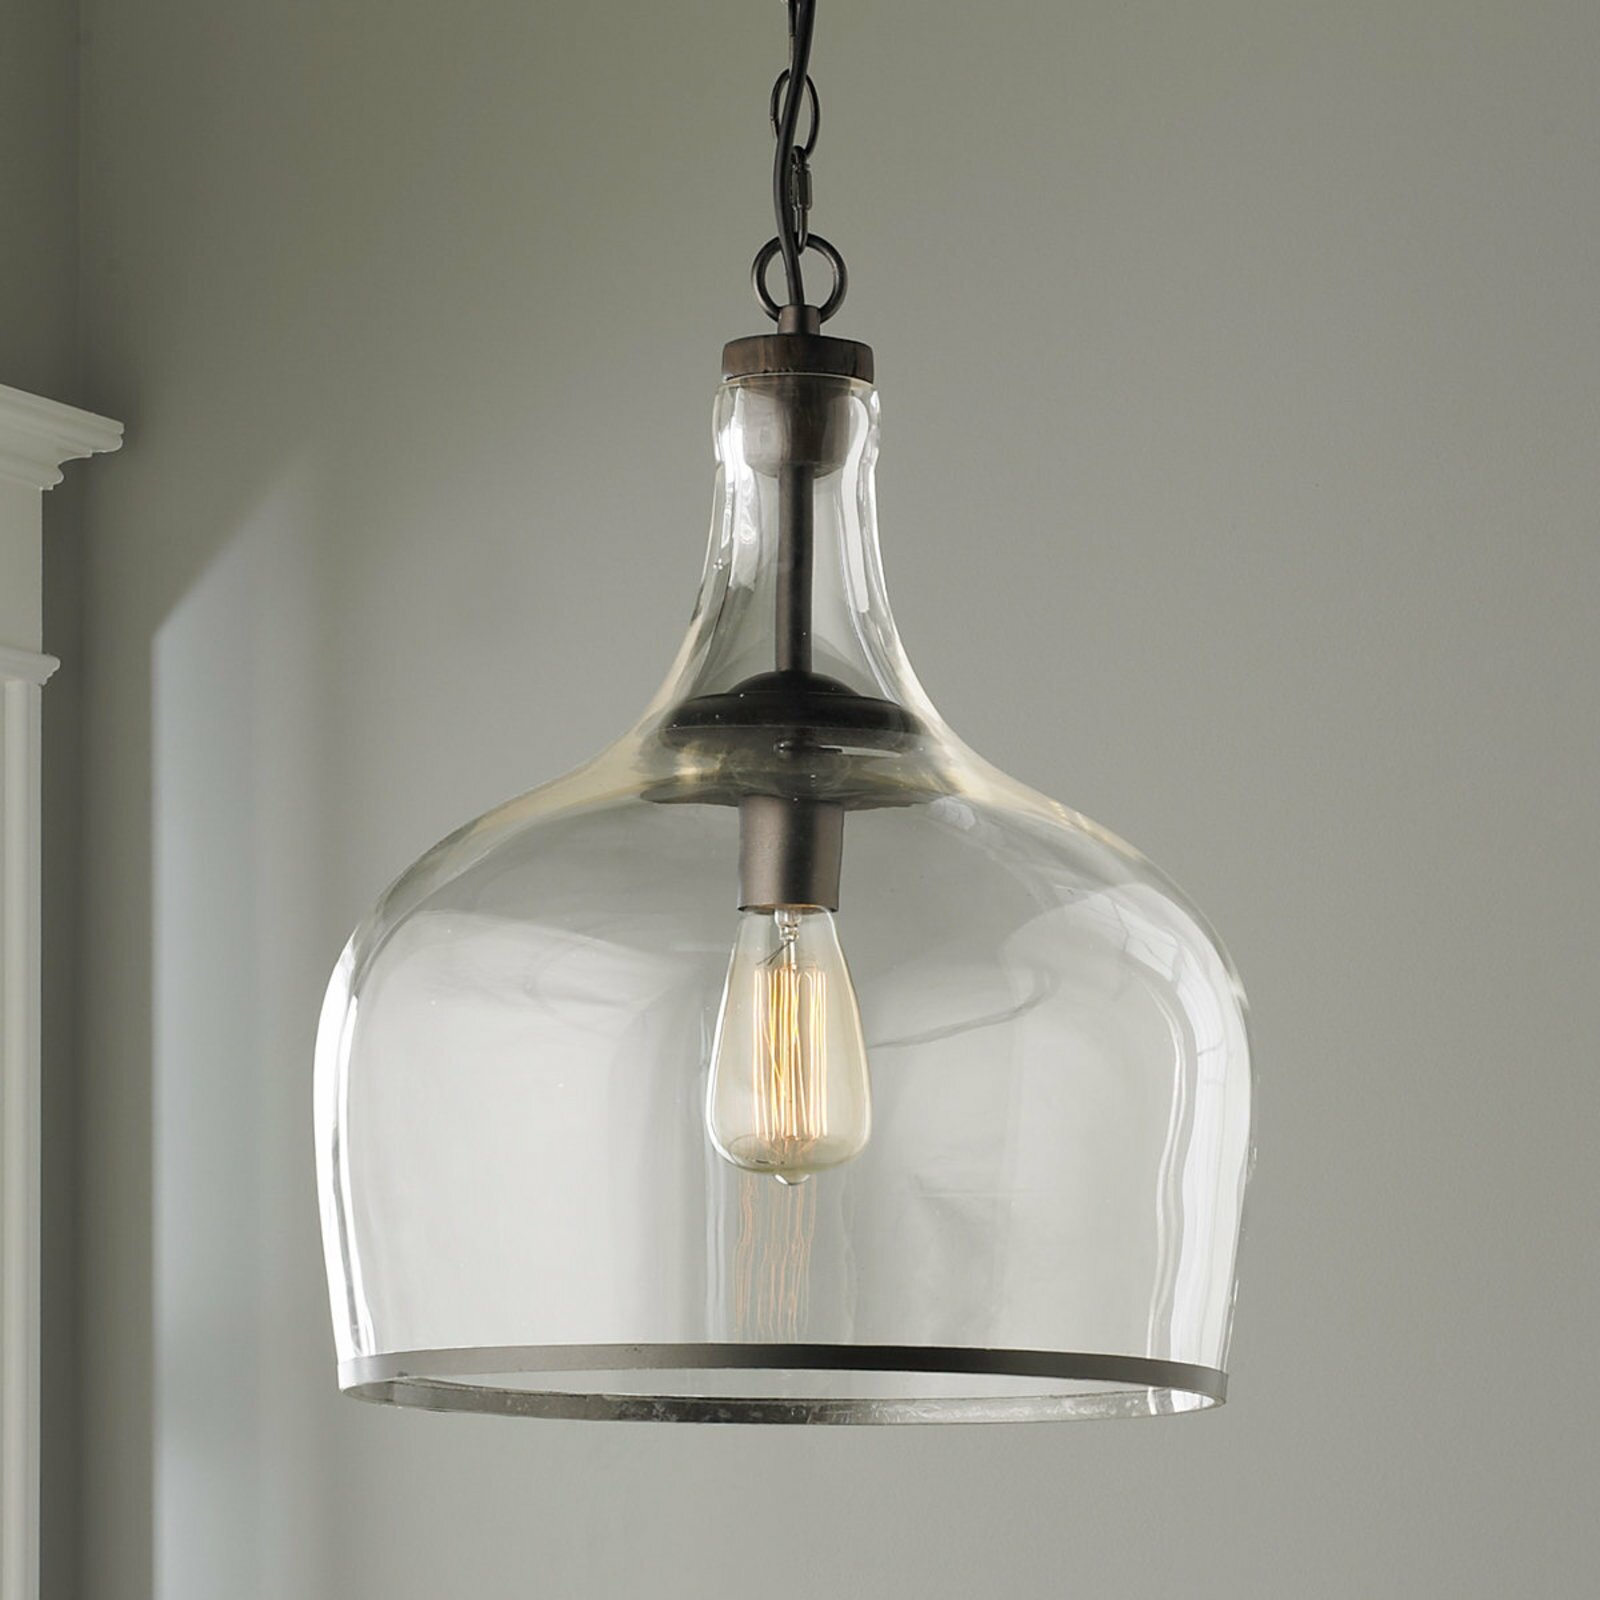 Glass Chandelier Shades | Glass Globe Lamp Shade Replacement | Chandelier Glass Bowl Replacement